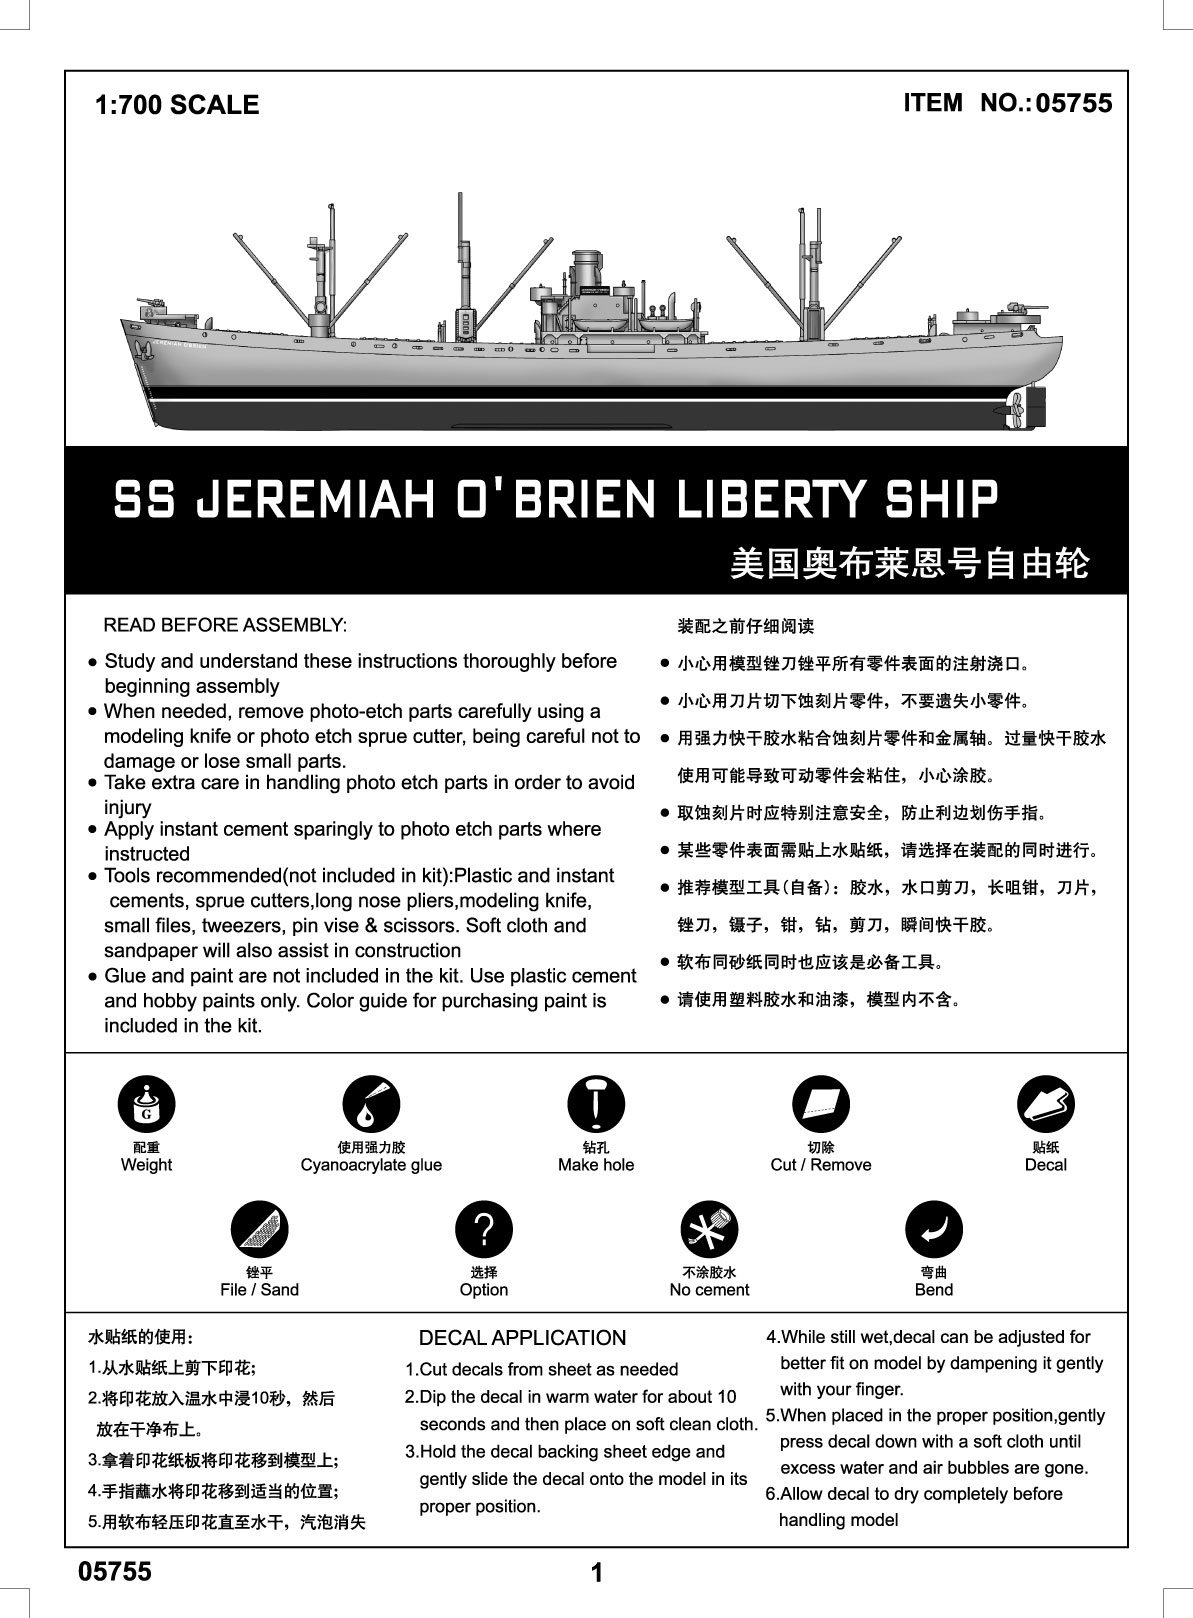 SS Jeremiah O'Brien WWII Liberty Ship Trumpeter 1:700 TRU05755